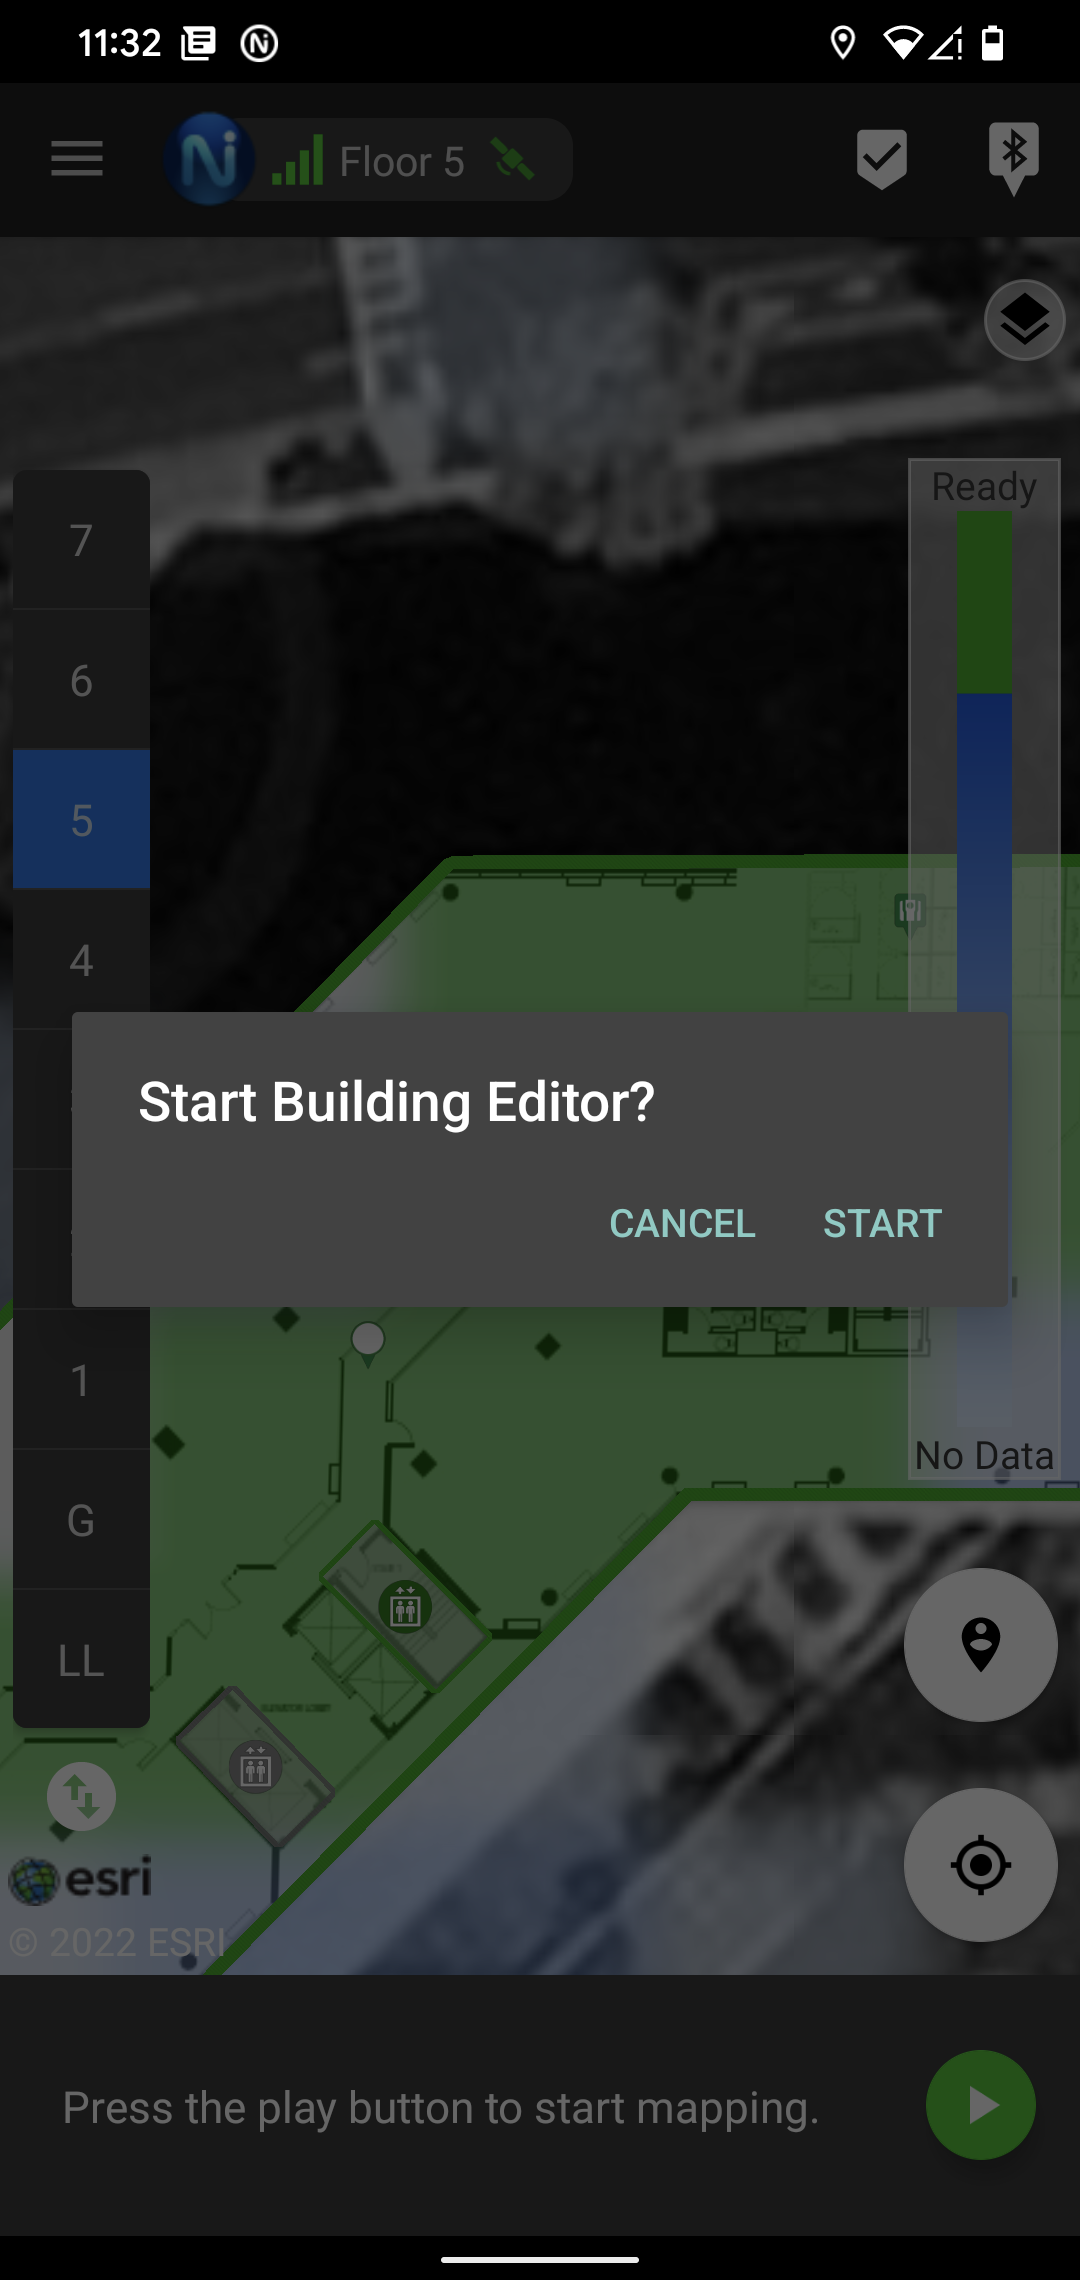 Start Building Editor